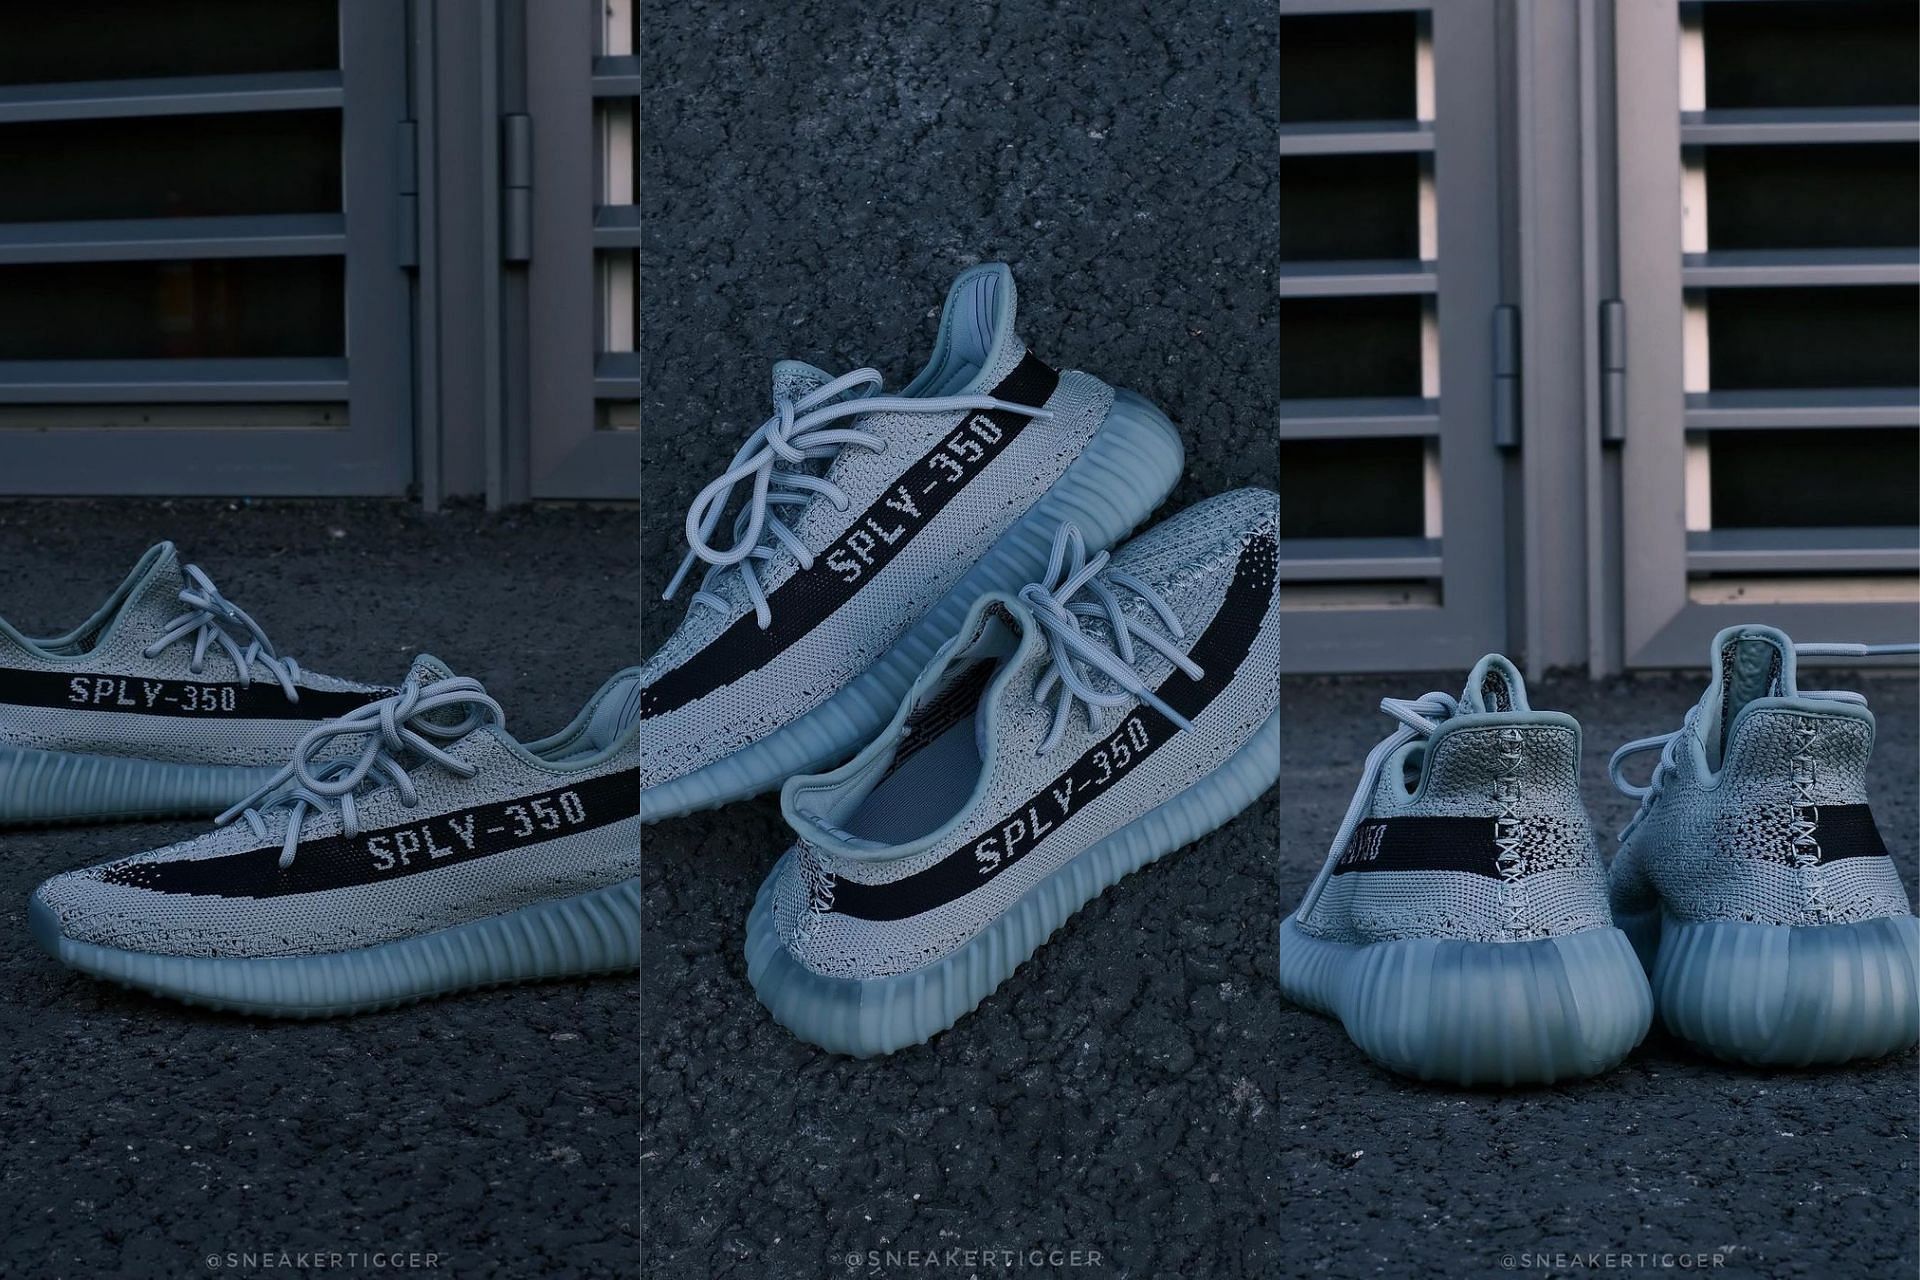 Upcoming Adidas Yeezy Boost 350 V2 Jade Ash sneaker in the midst of Kanye West - Adidas drama (Image via @sneakertigger / Instagram)